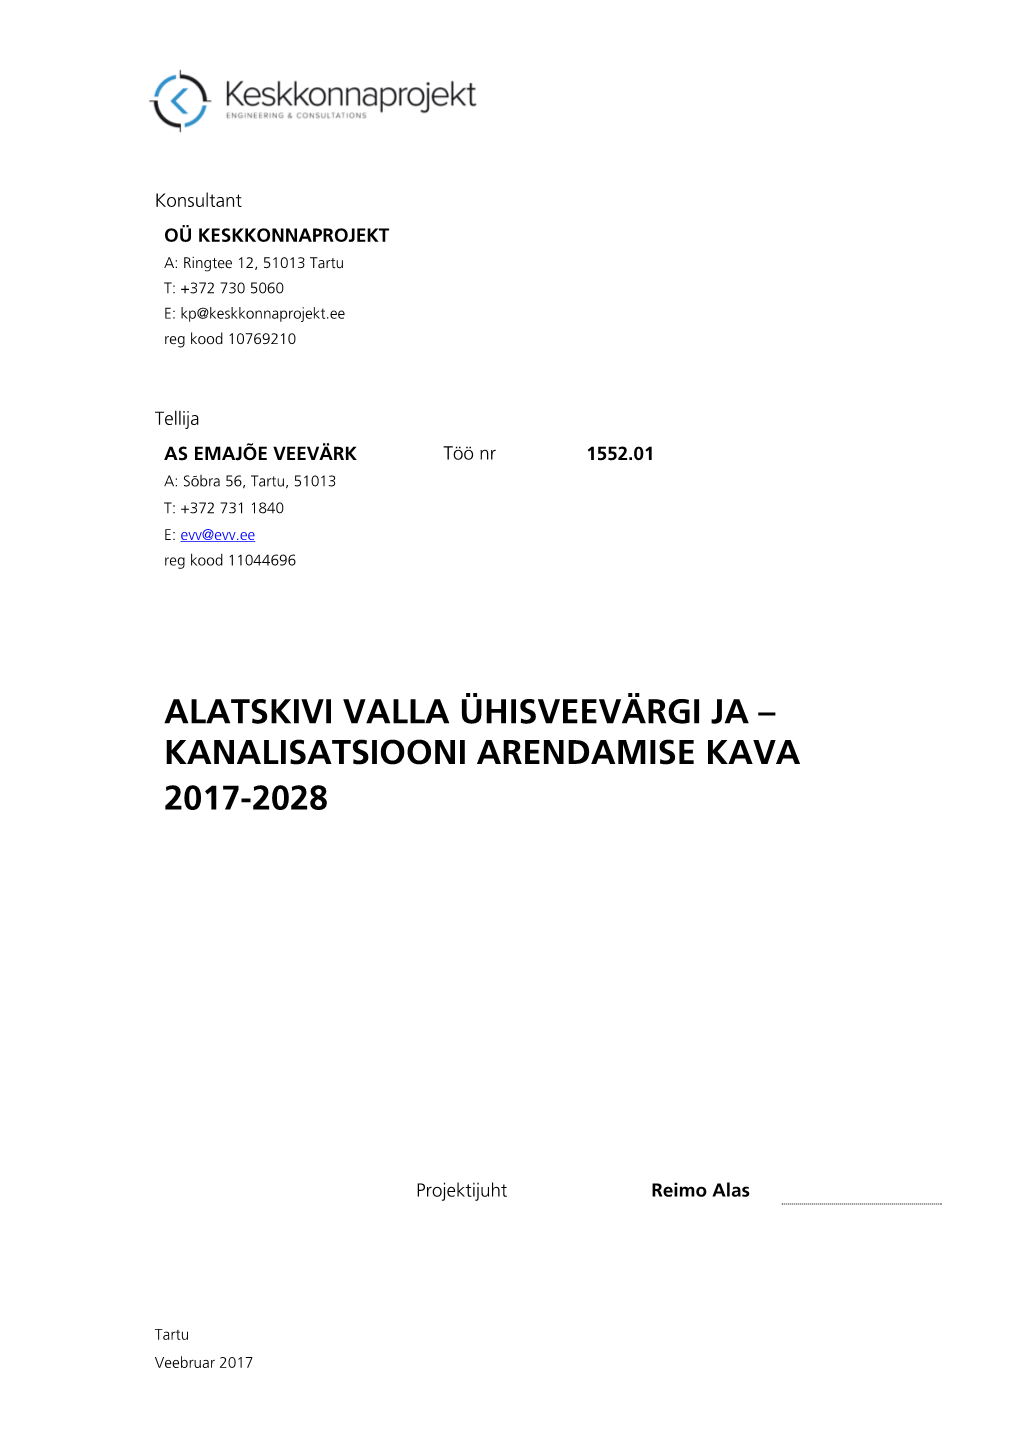 Alatskivi Valla ÜVK 2017-2028